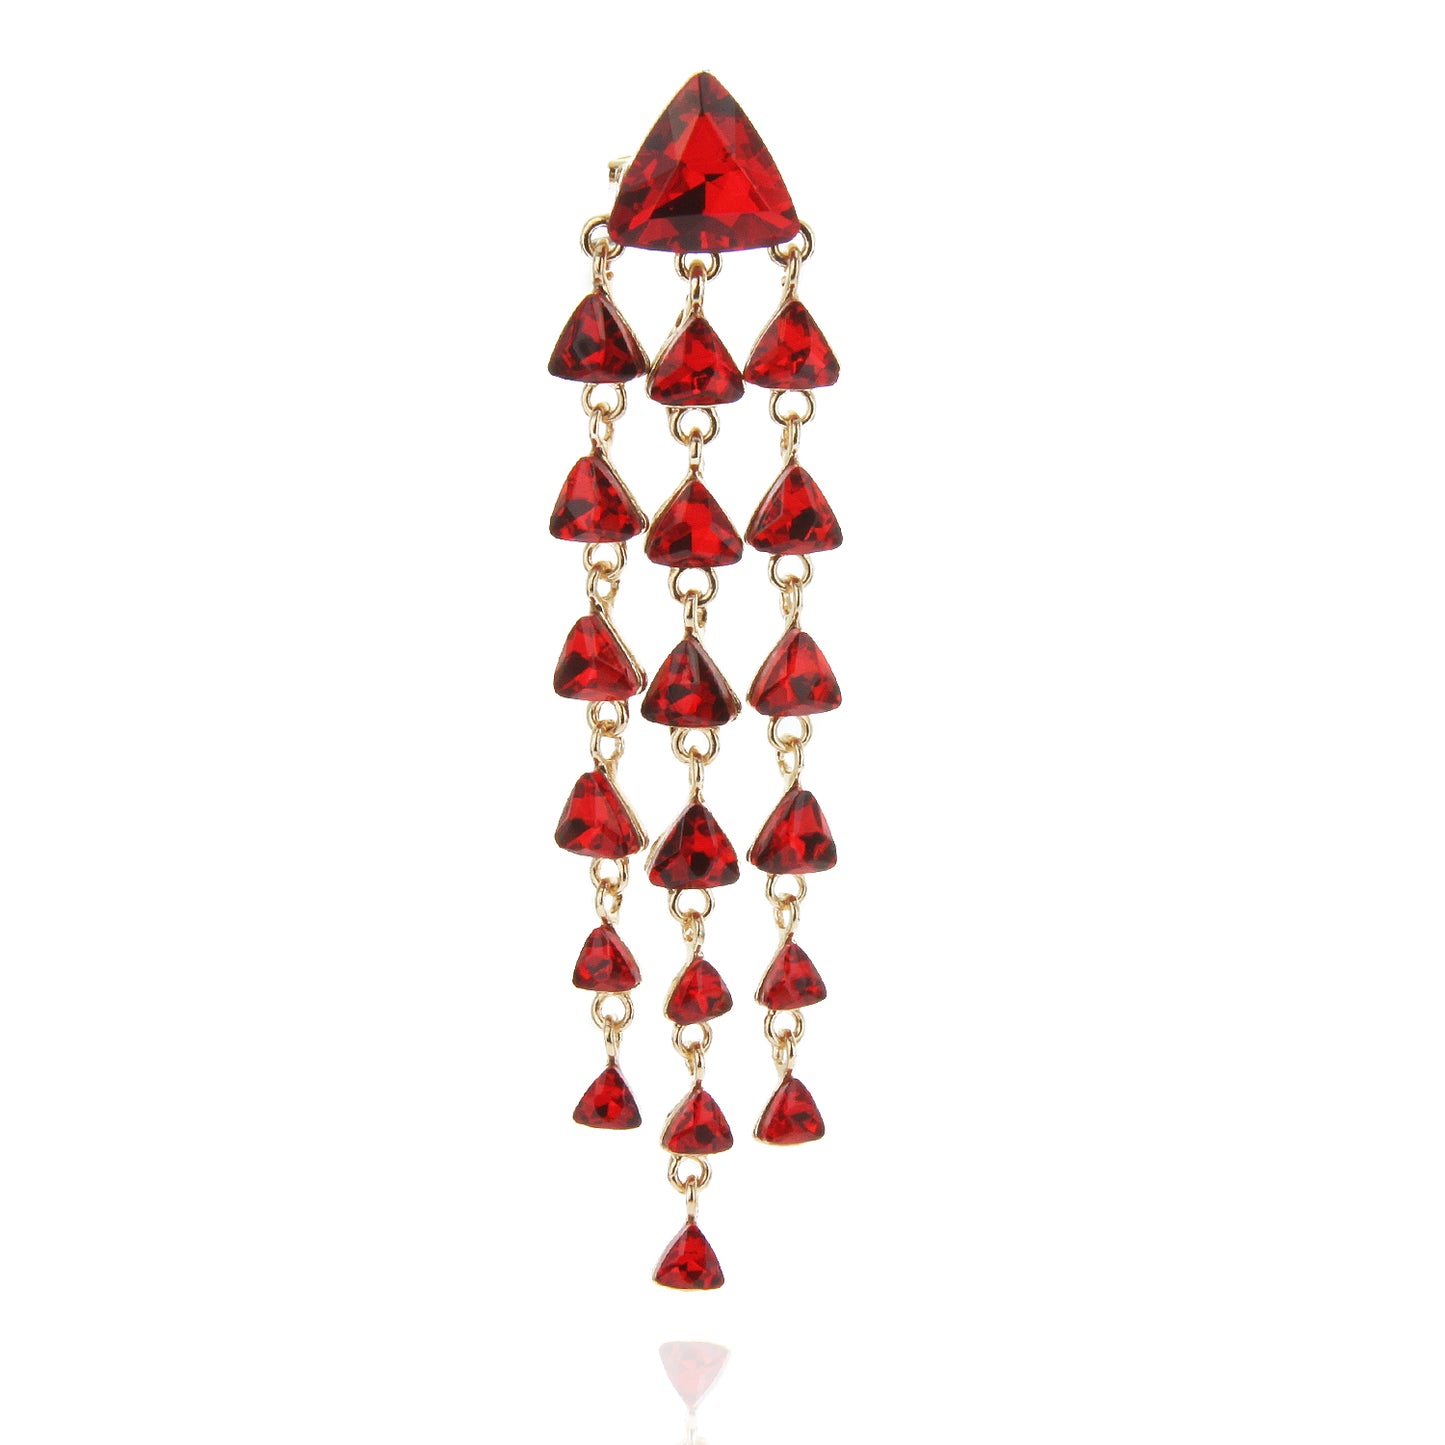 Everly Triangle 3-Tier Rhinestone Brooch - Red